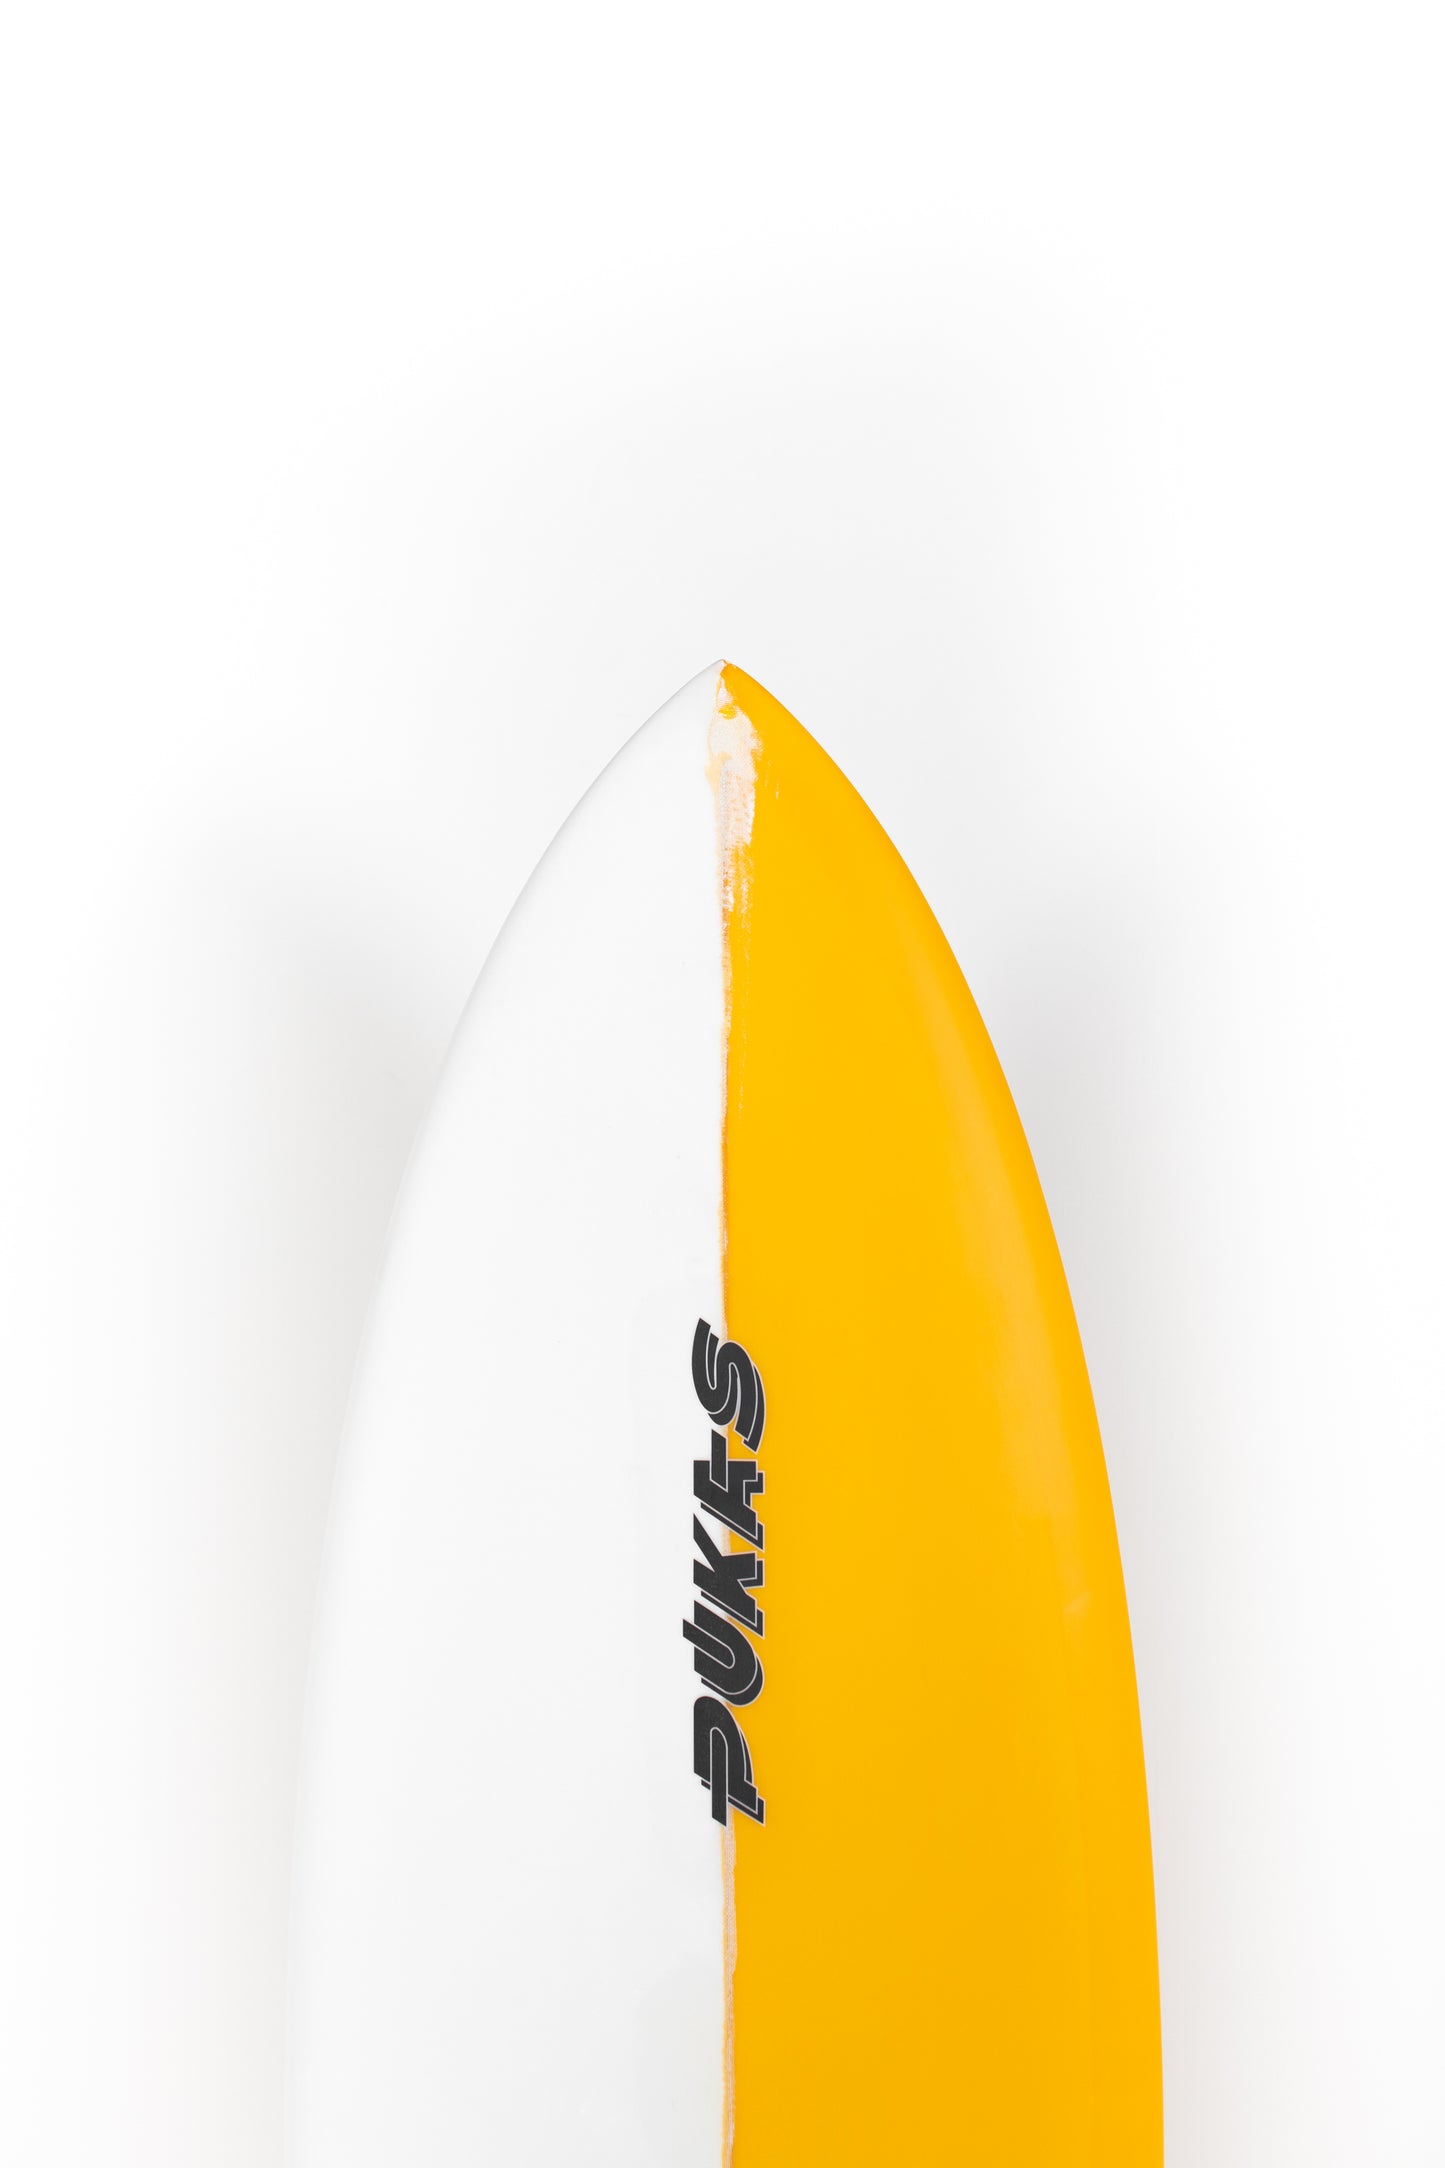 
                  
                    Pukas Surf Shop - Pukas Surfboard - ORIGINAL 69 by Axel Lorentz - 6’0” x 20,75 x 2,63 - 35,7L - AX07927
                  
                